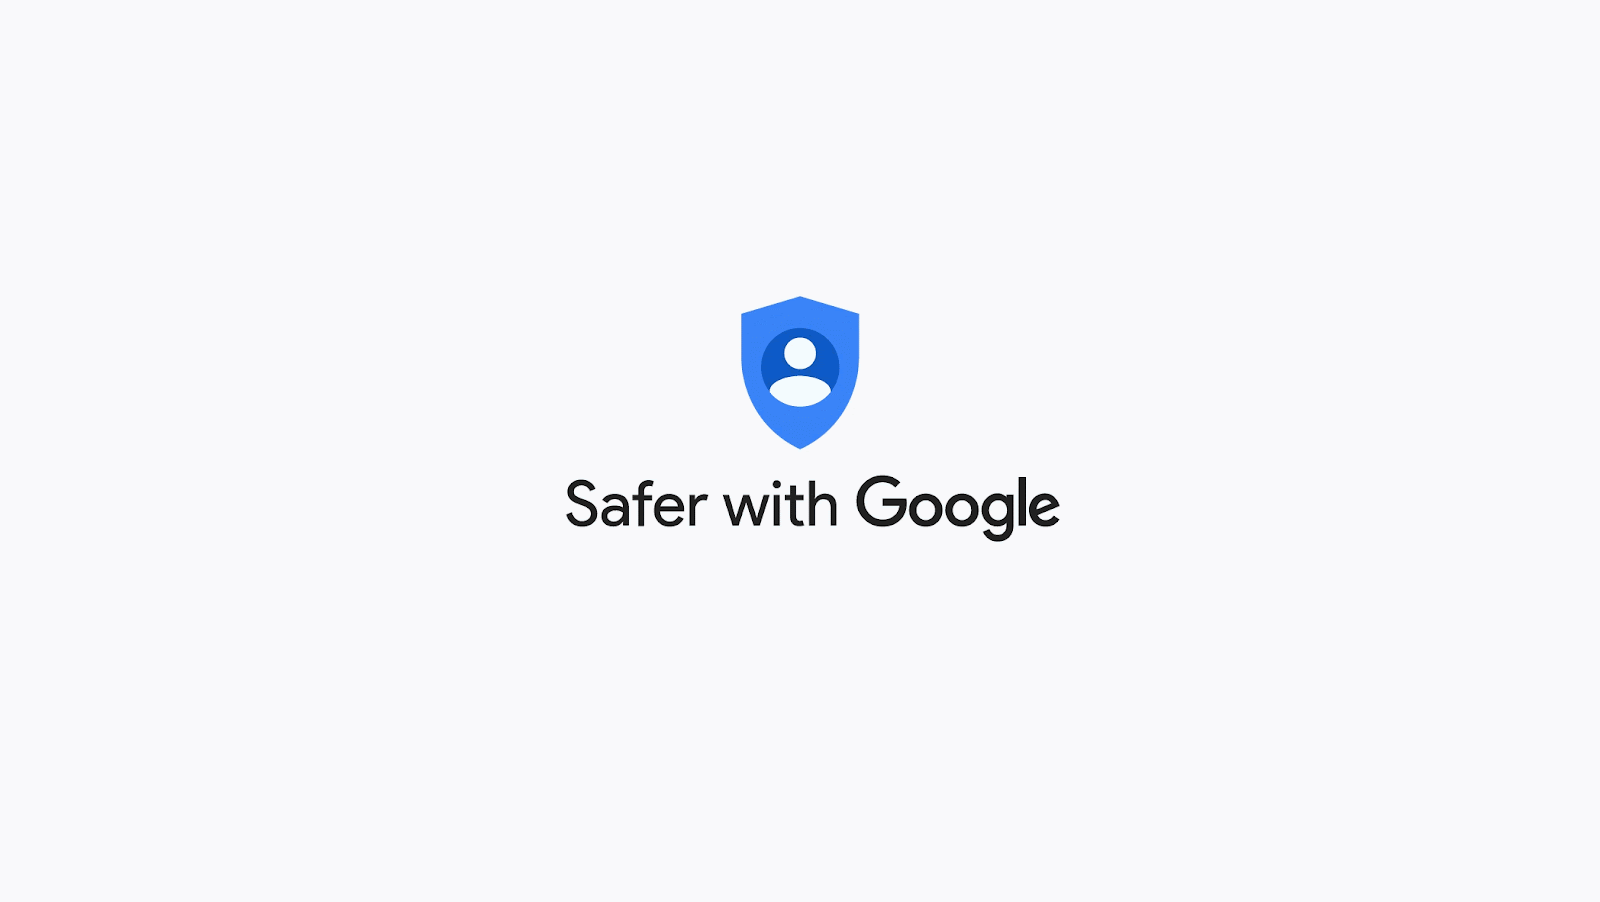 Google을 사용하면 더욱 안전해집니다'라는 텍스트 주위에 계정 보안에 대한 다양한 알림이 표시됩니다.